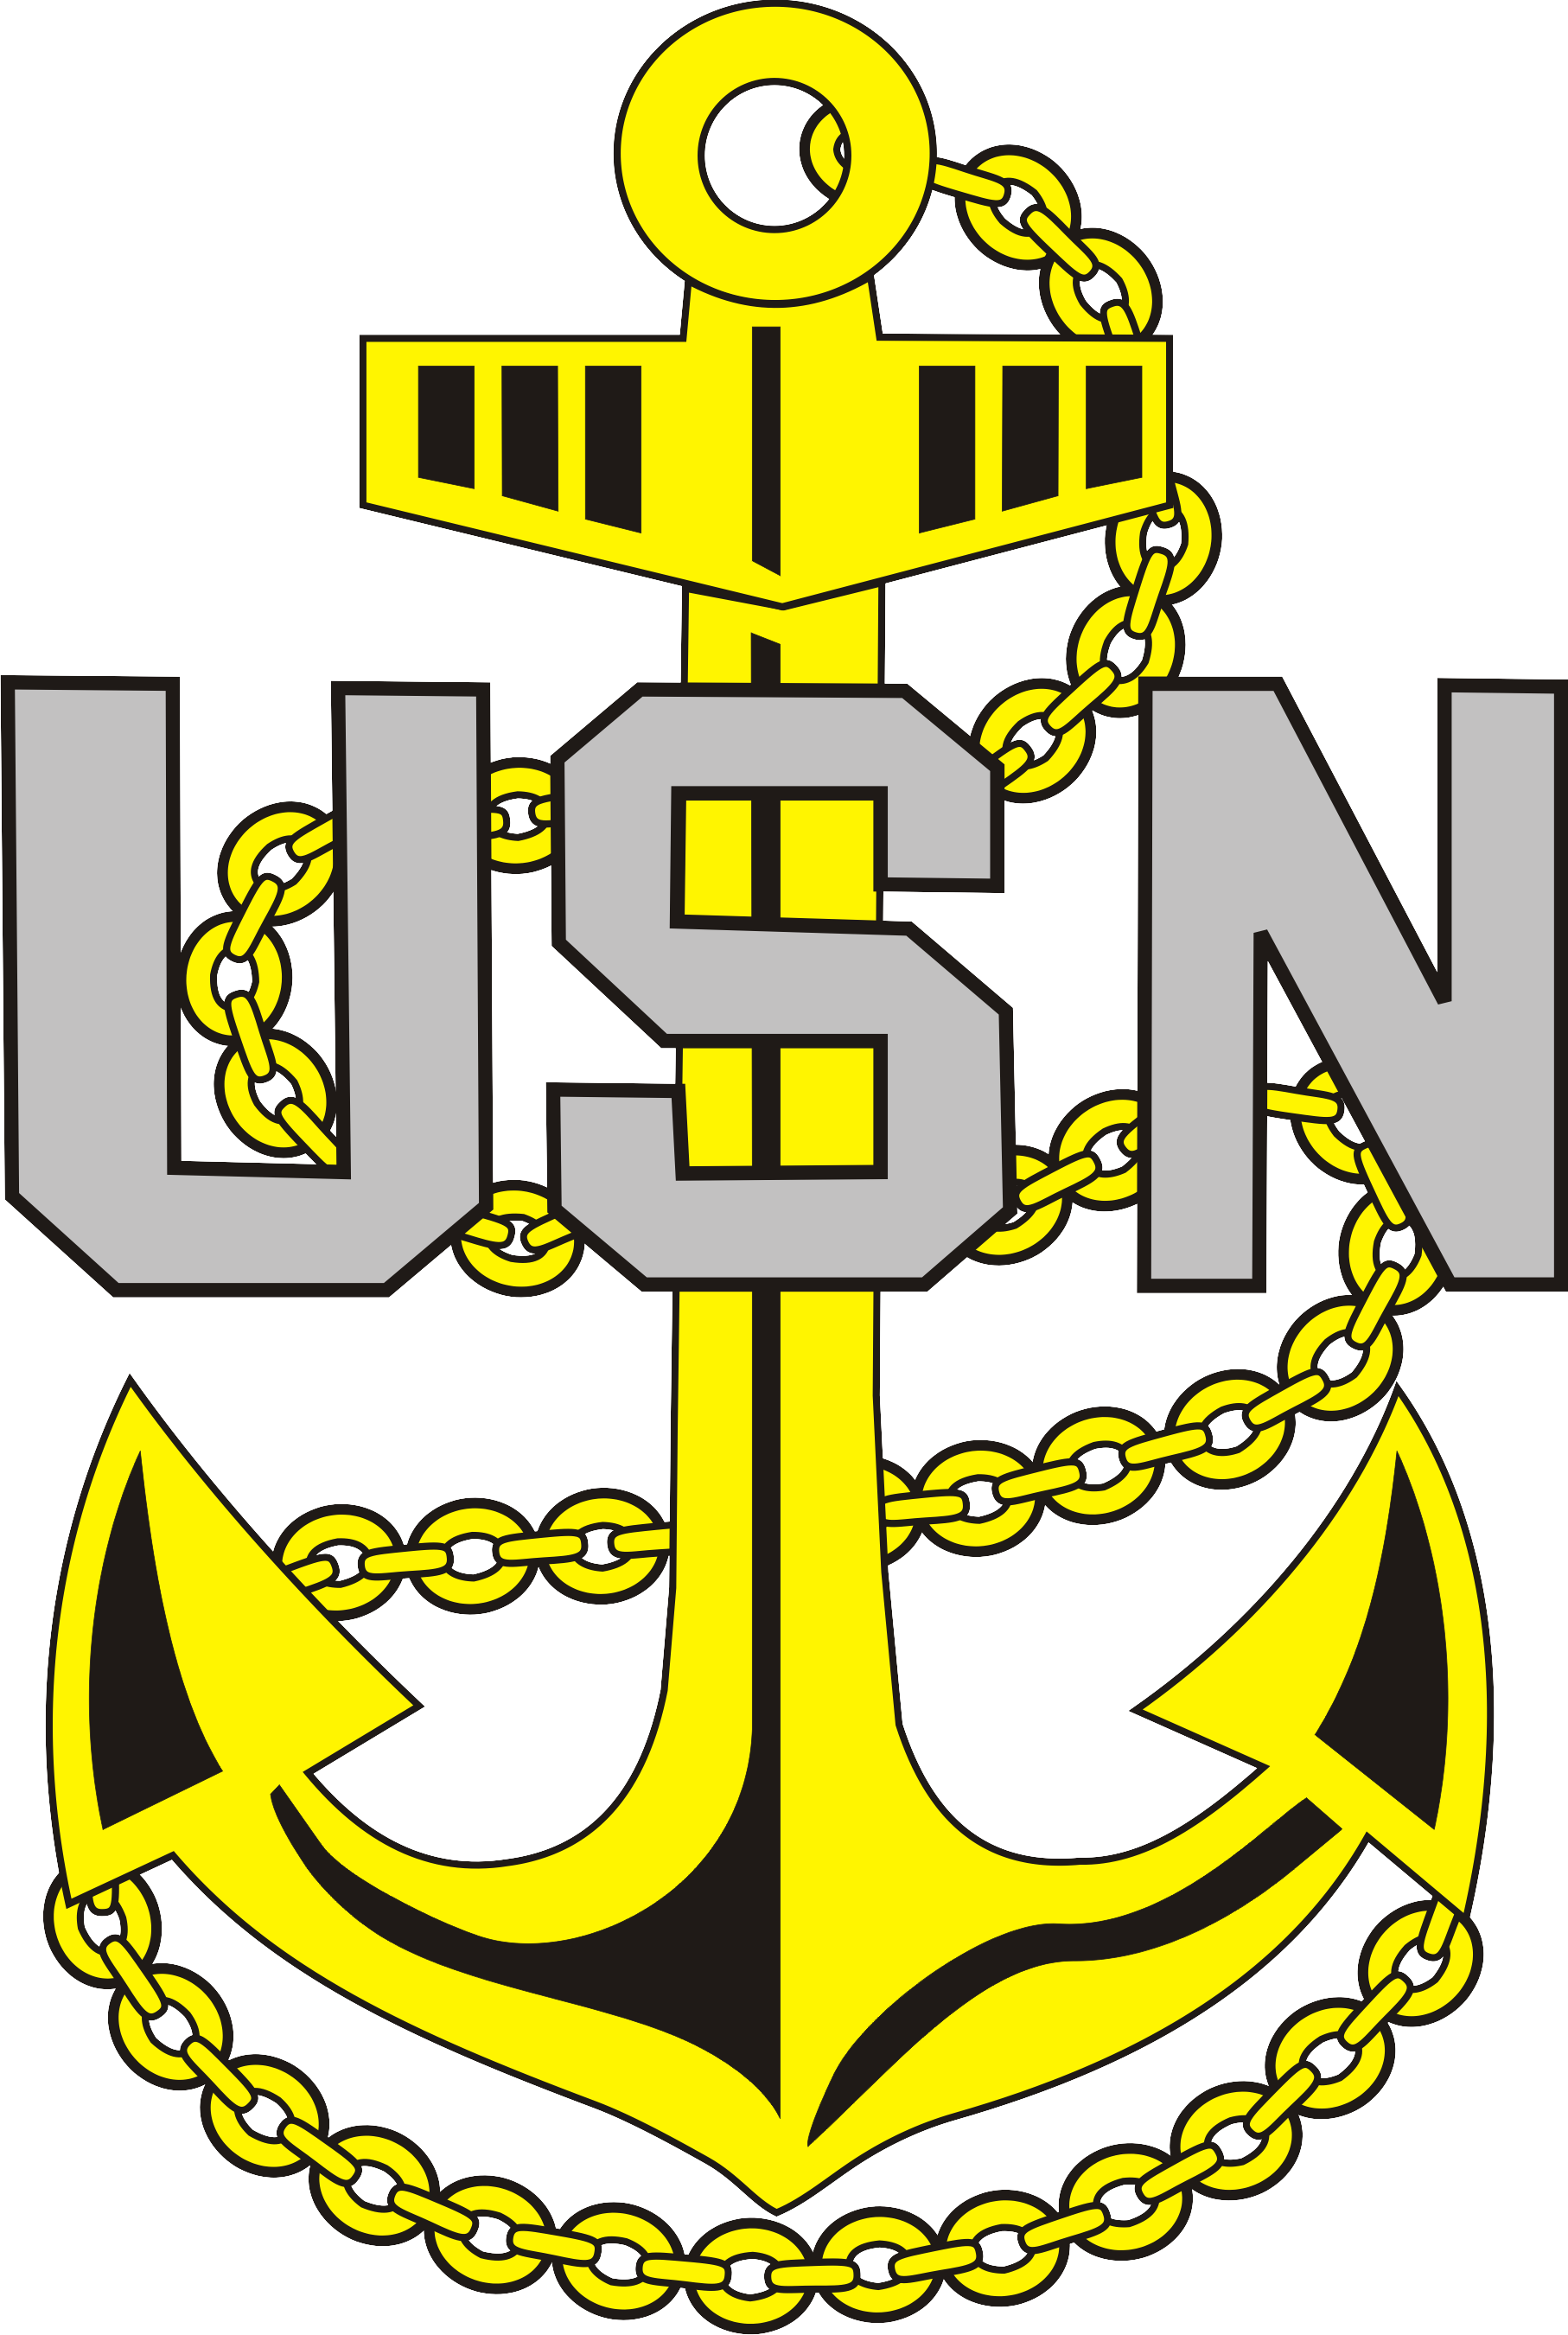 Sailor clipart sailor us navy. Military fabric logo usn